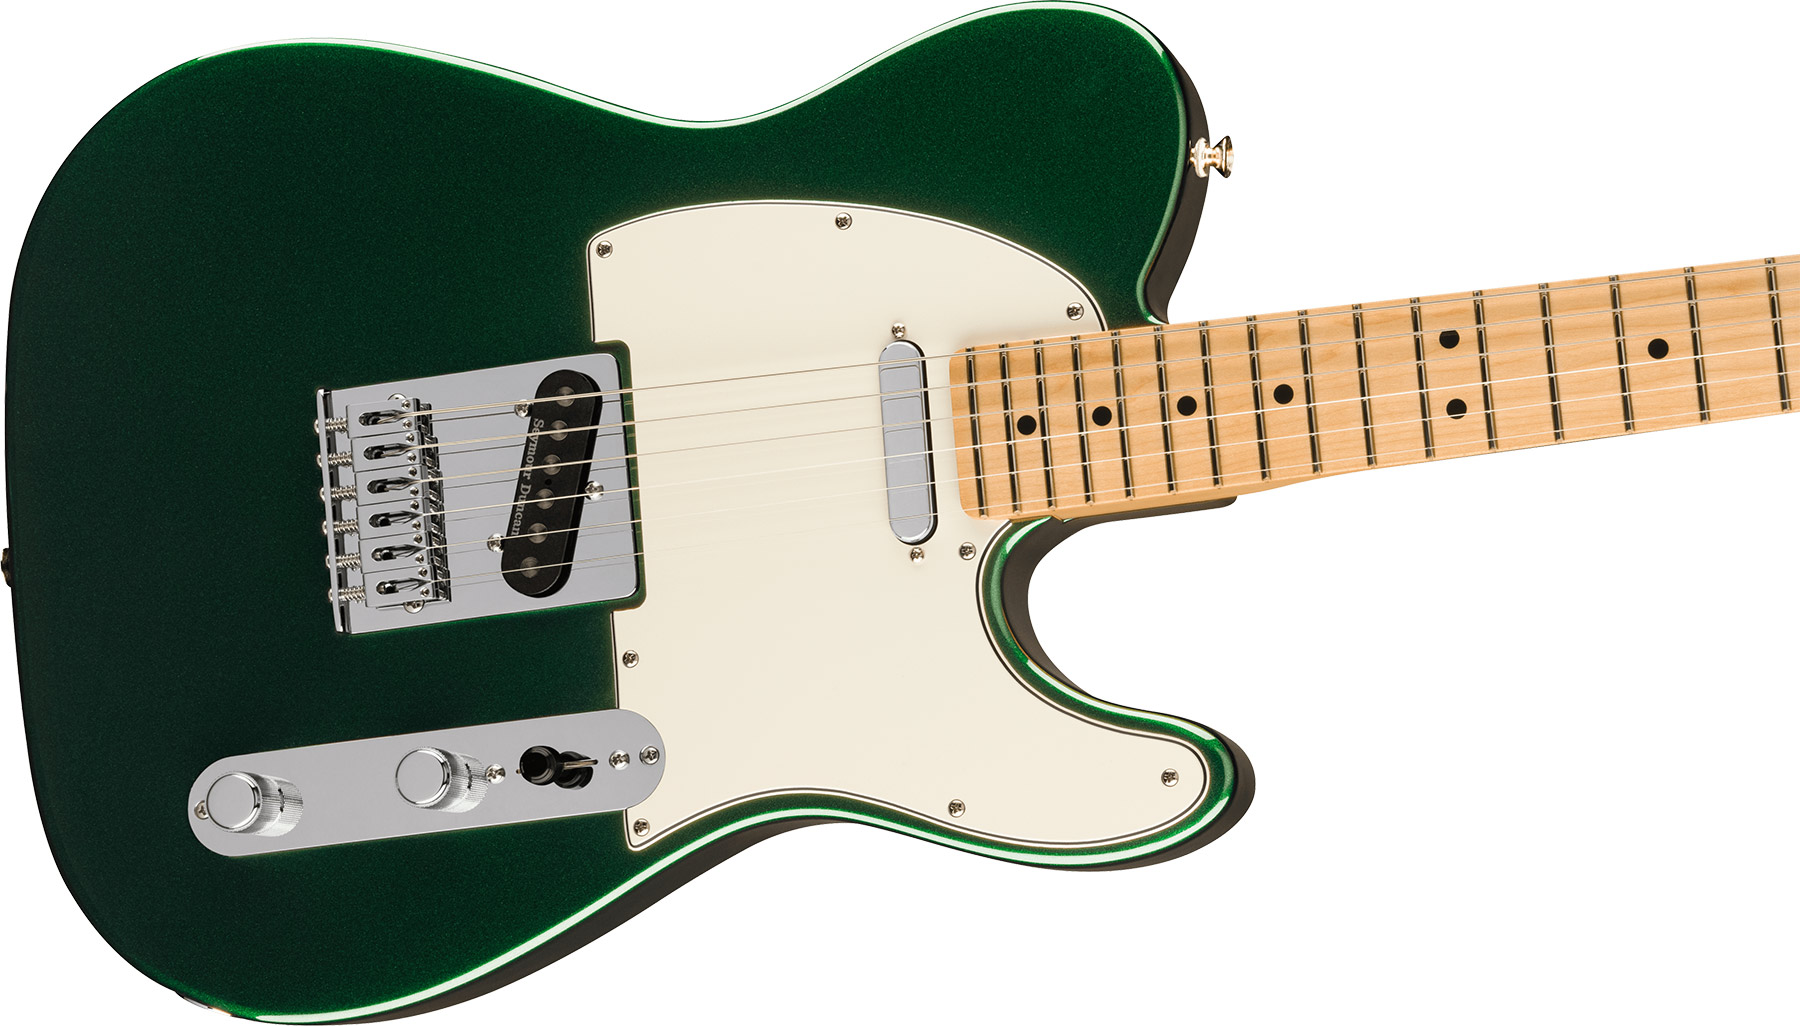 Fender Tele Player Ltd Mex 2s Seymour Duncan Mn - British Racing Green - Guitarra eléctrica con forma de tel - Variation 2